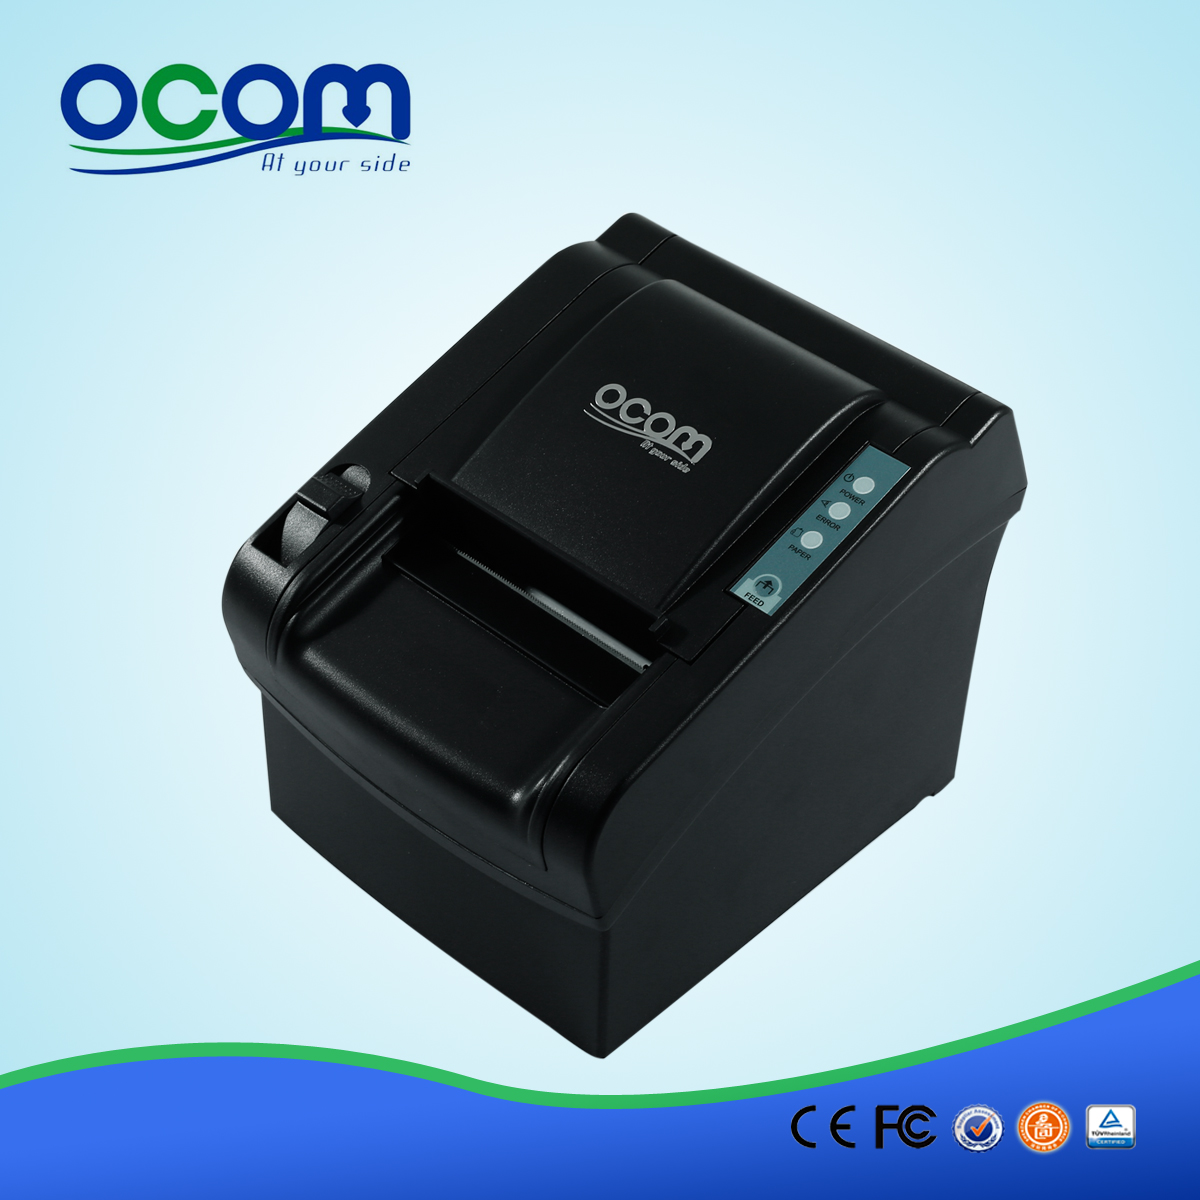 OCPP-802: 80 mm de alta calidad de la cabeza impresora térmica, impresora de la posición térmica barato